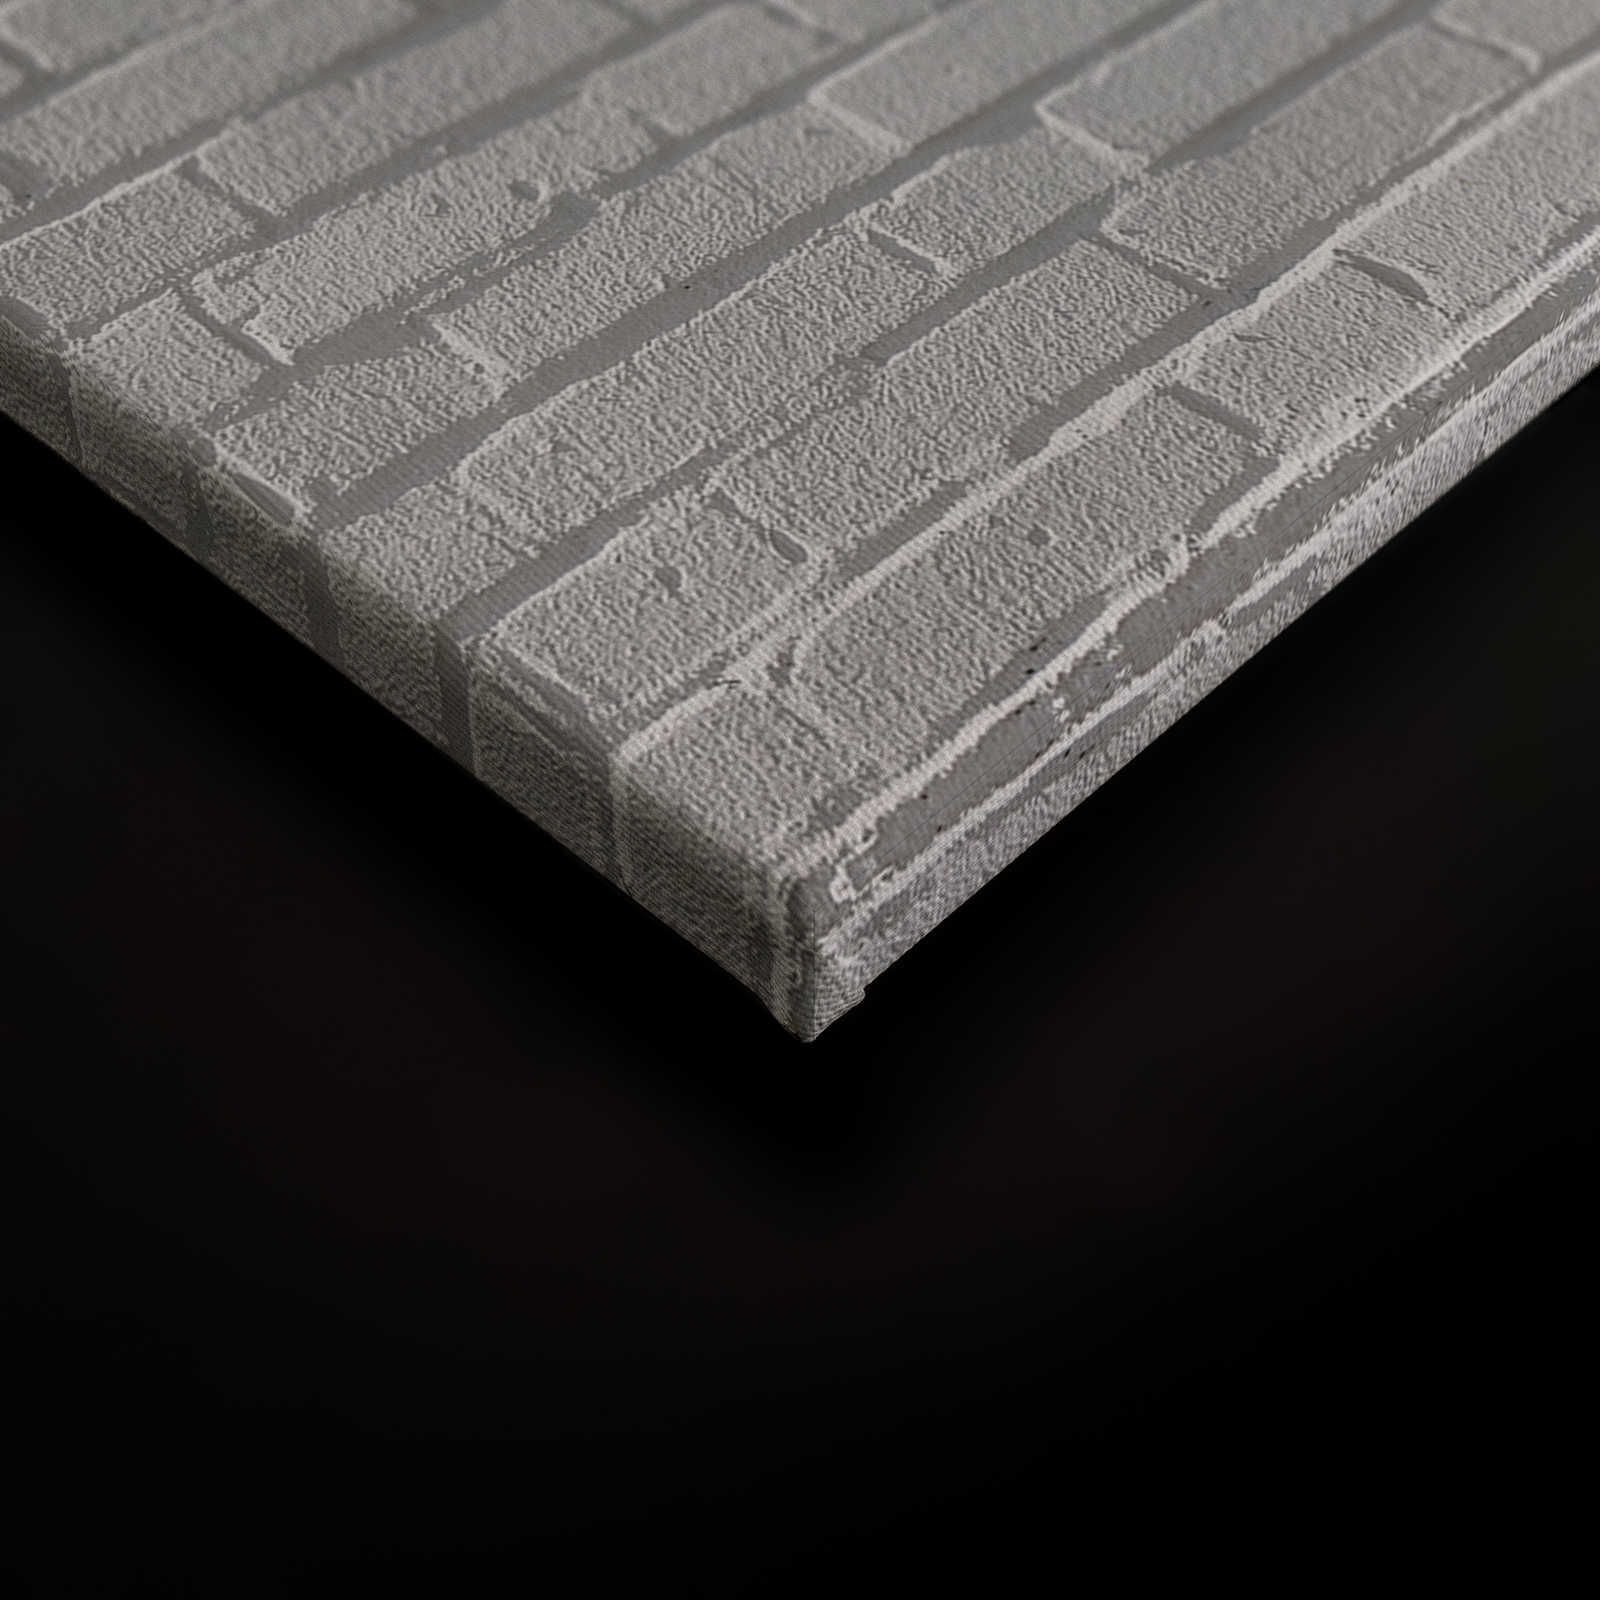             Leinwandbild graue Ziegelmauer in 3D Look – 0,90 m x 0,60 m
        